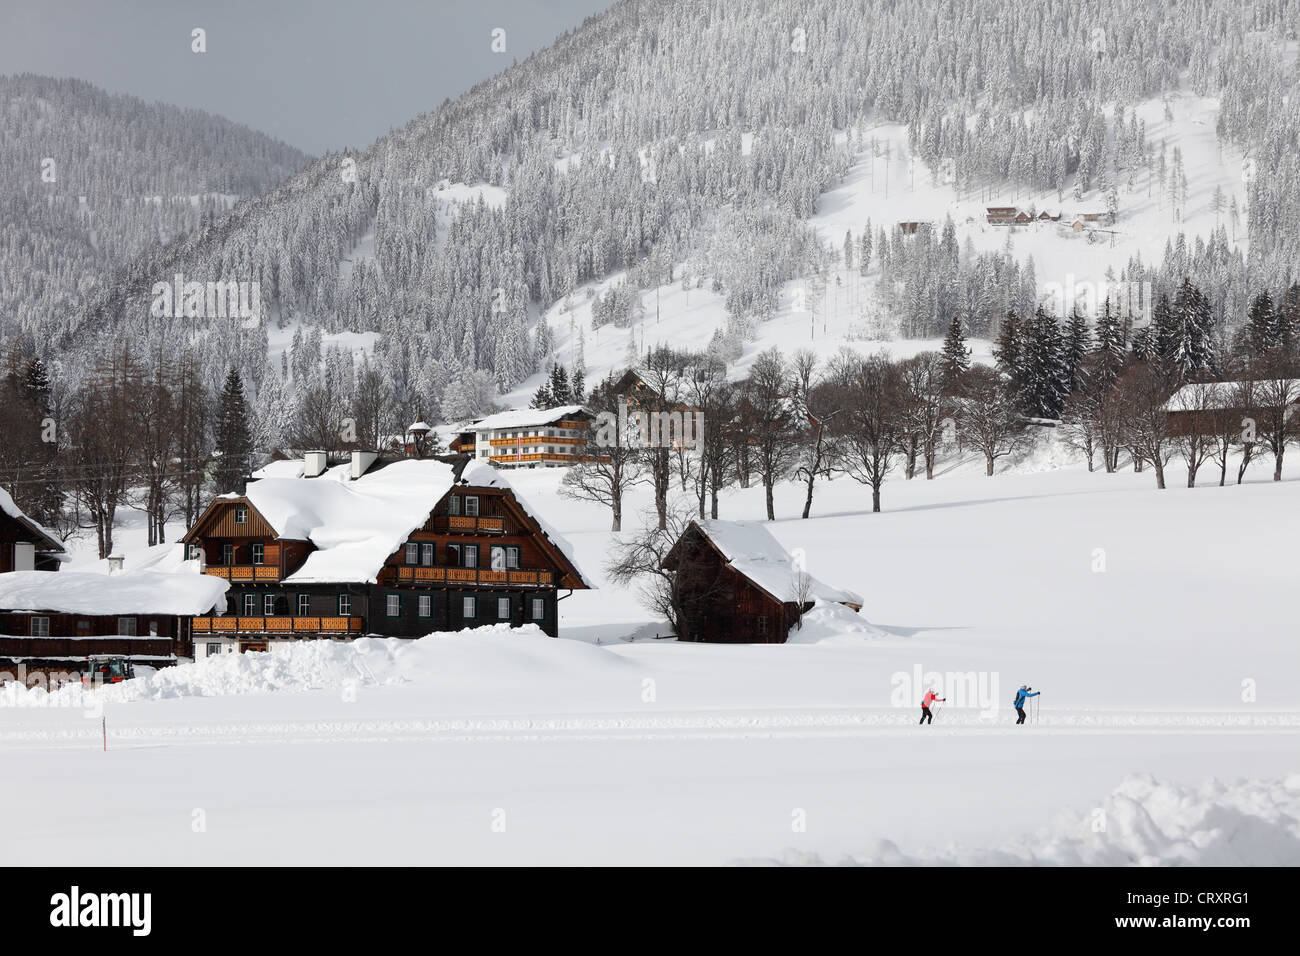 Austria, Styria, People skiing on snowy landscape Stock Photo